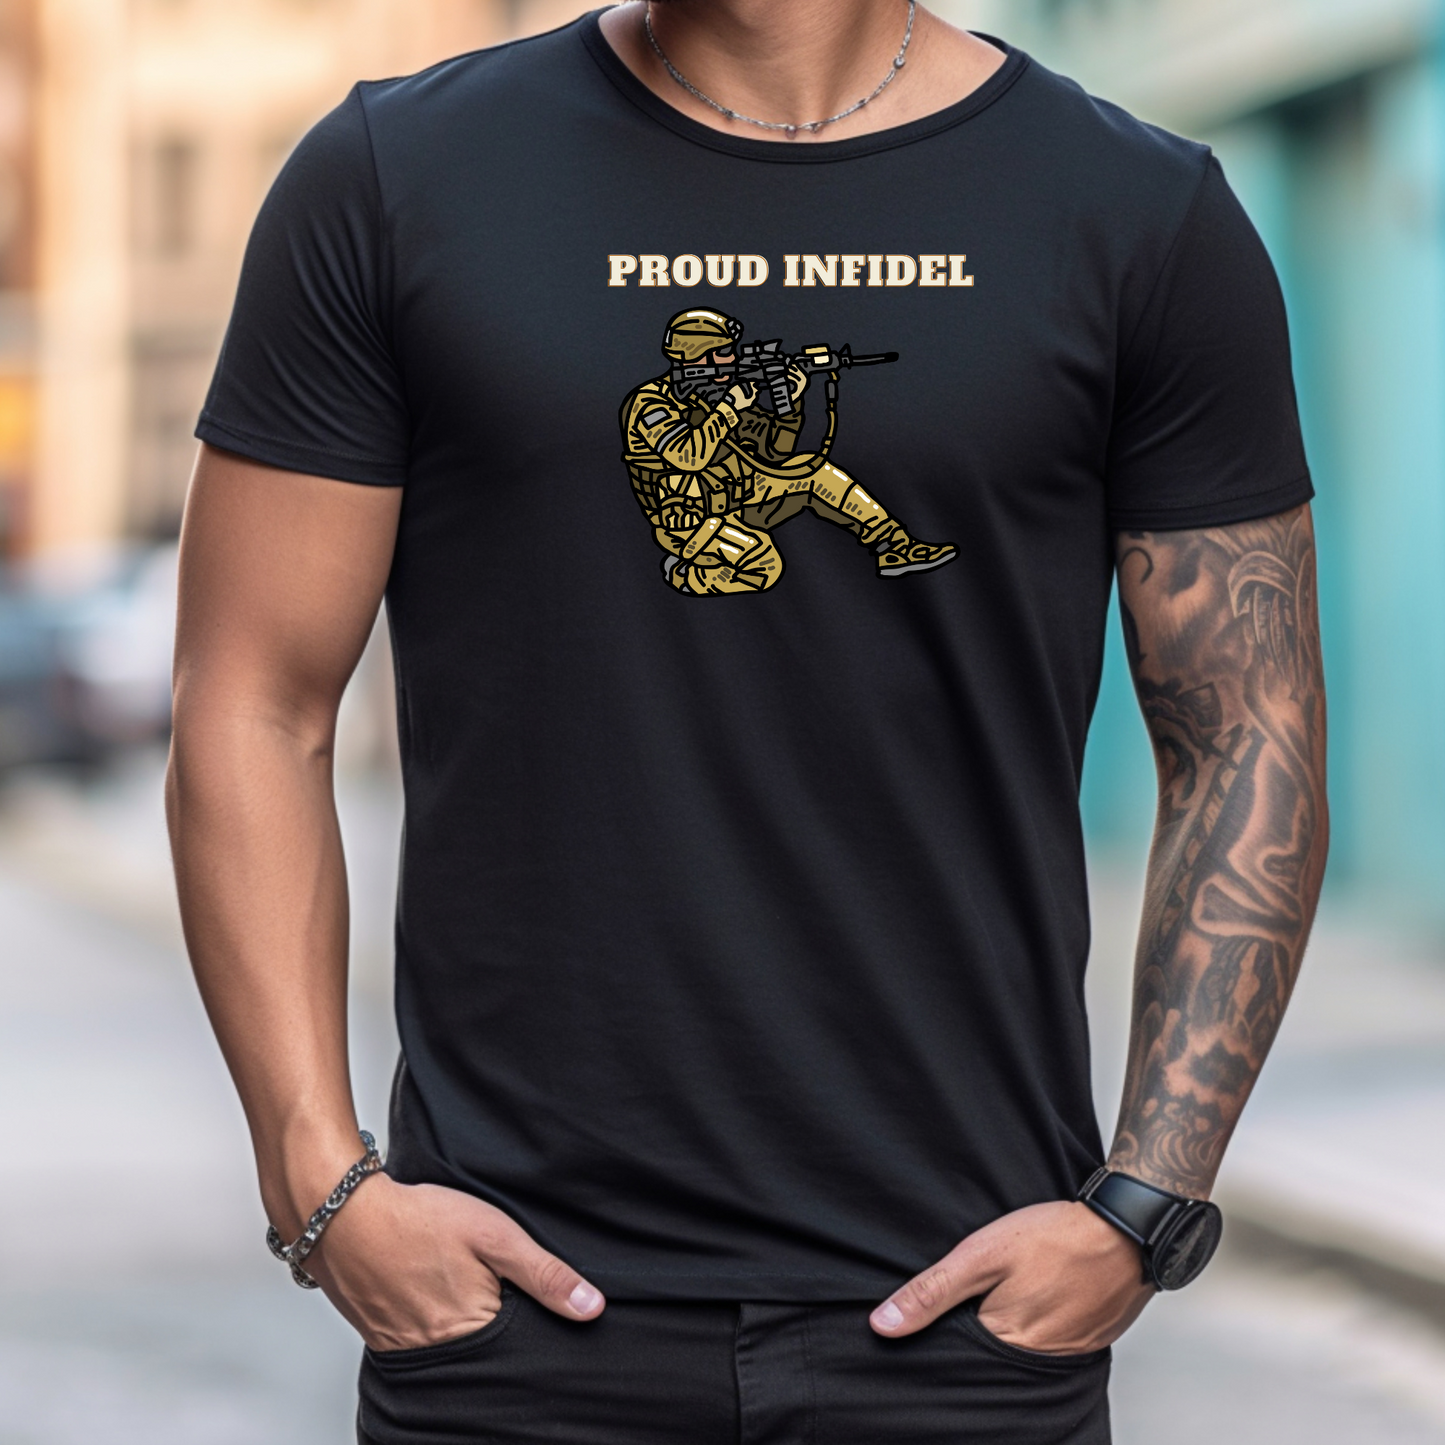 U.S. Special Ops Infidel Shirt, Proud Infidel U.S. Military T shirt